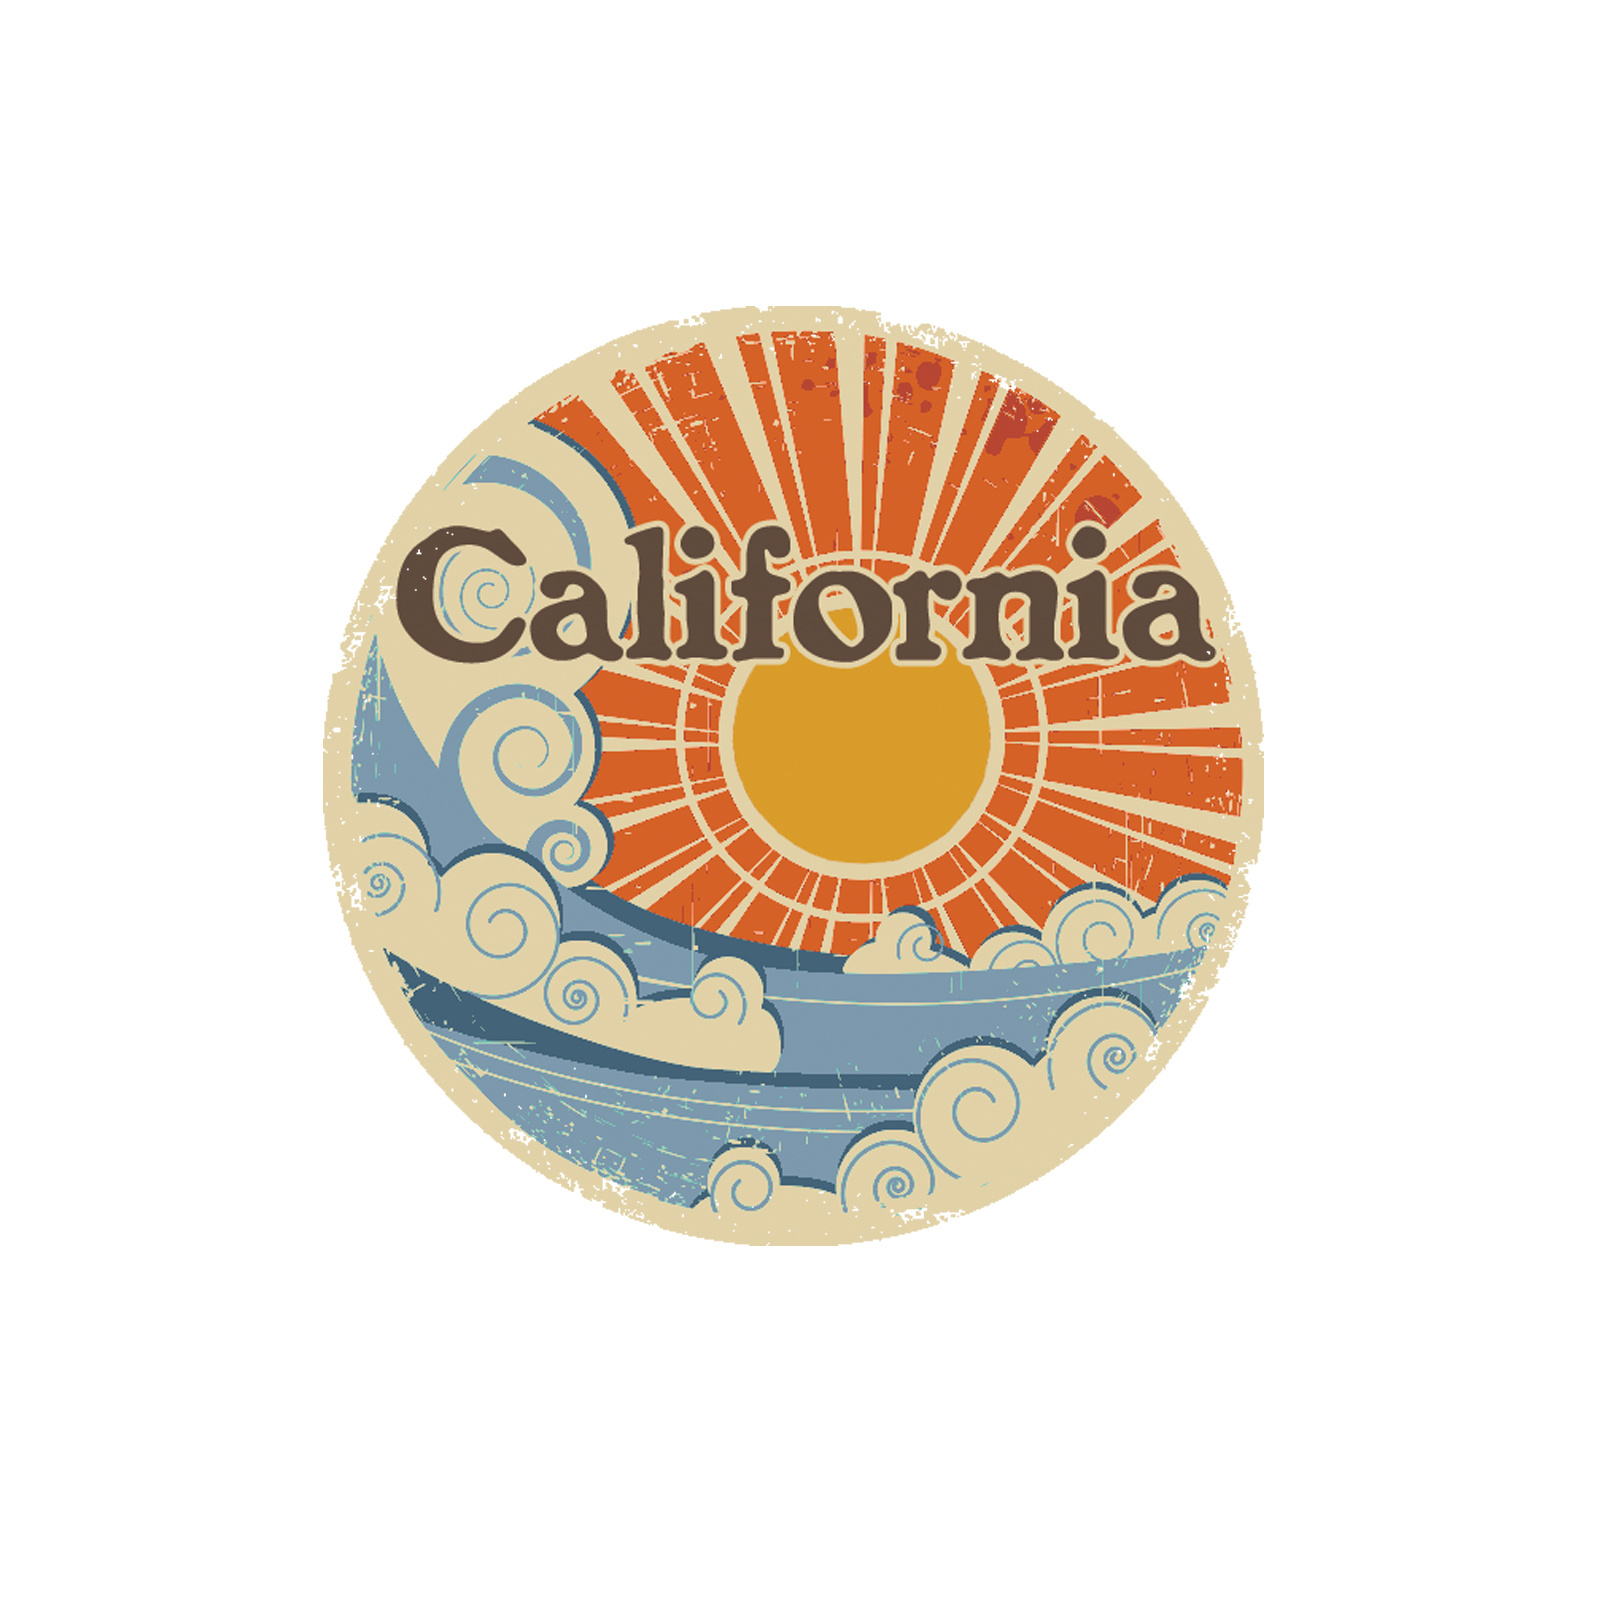 California Sea and Surf Camp Cap